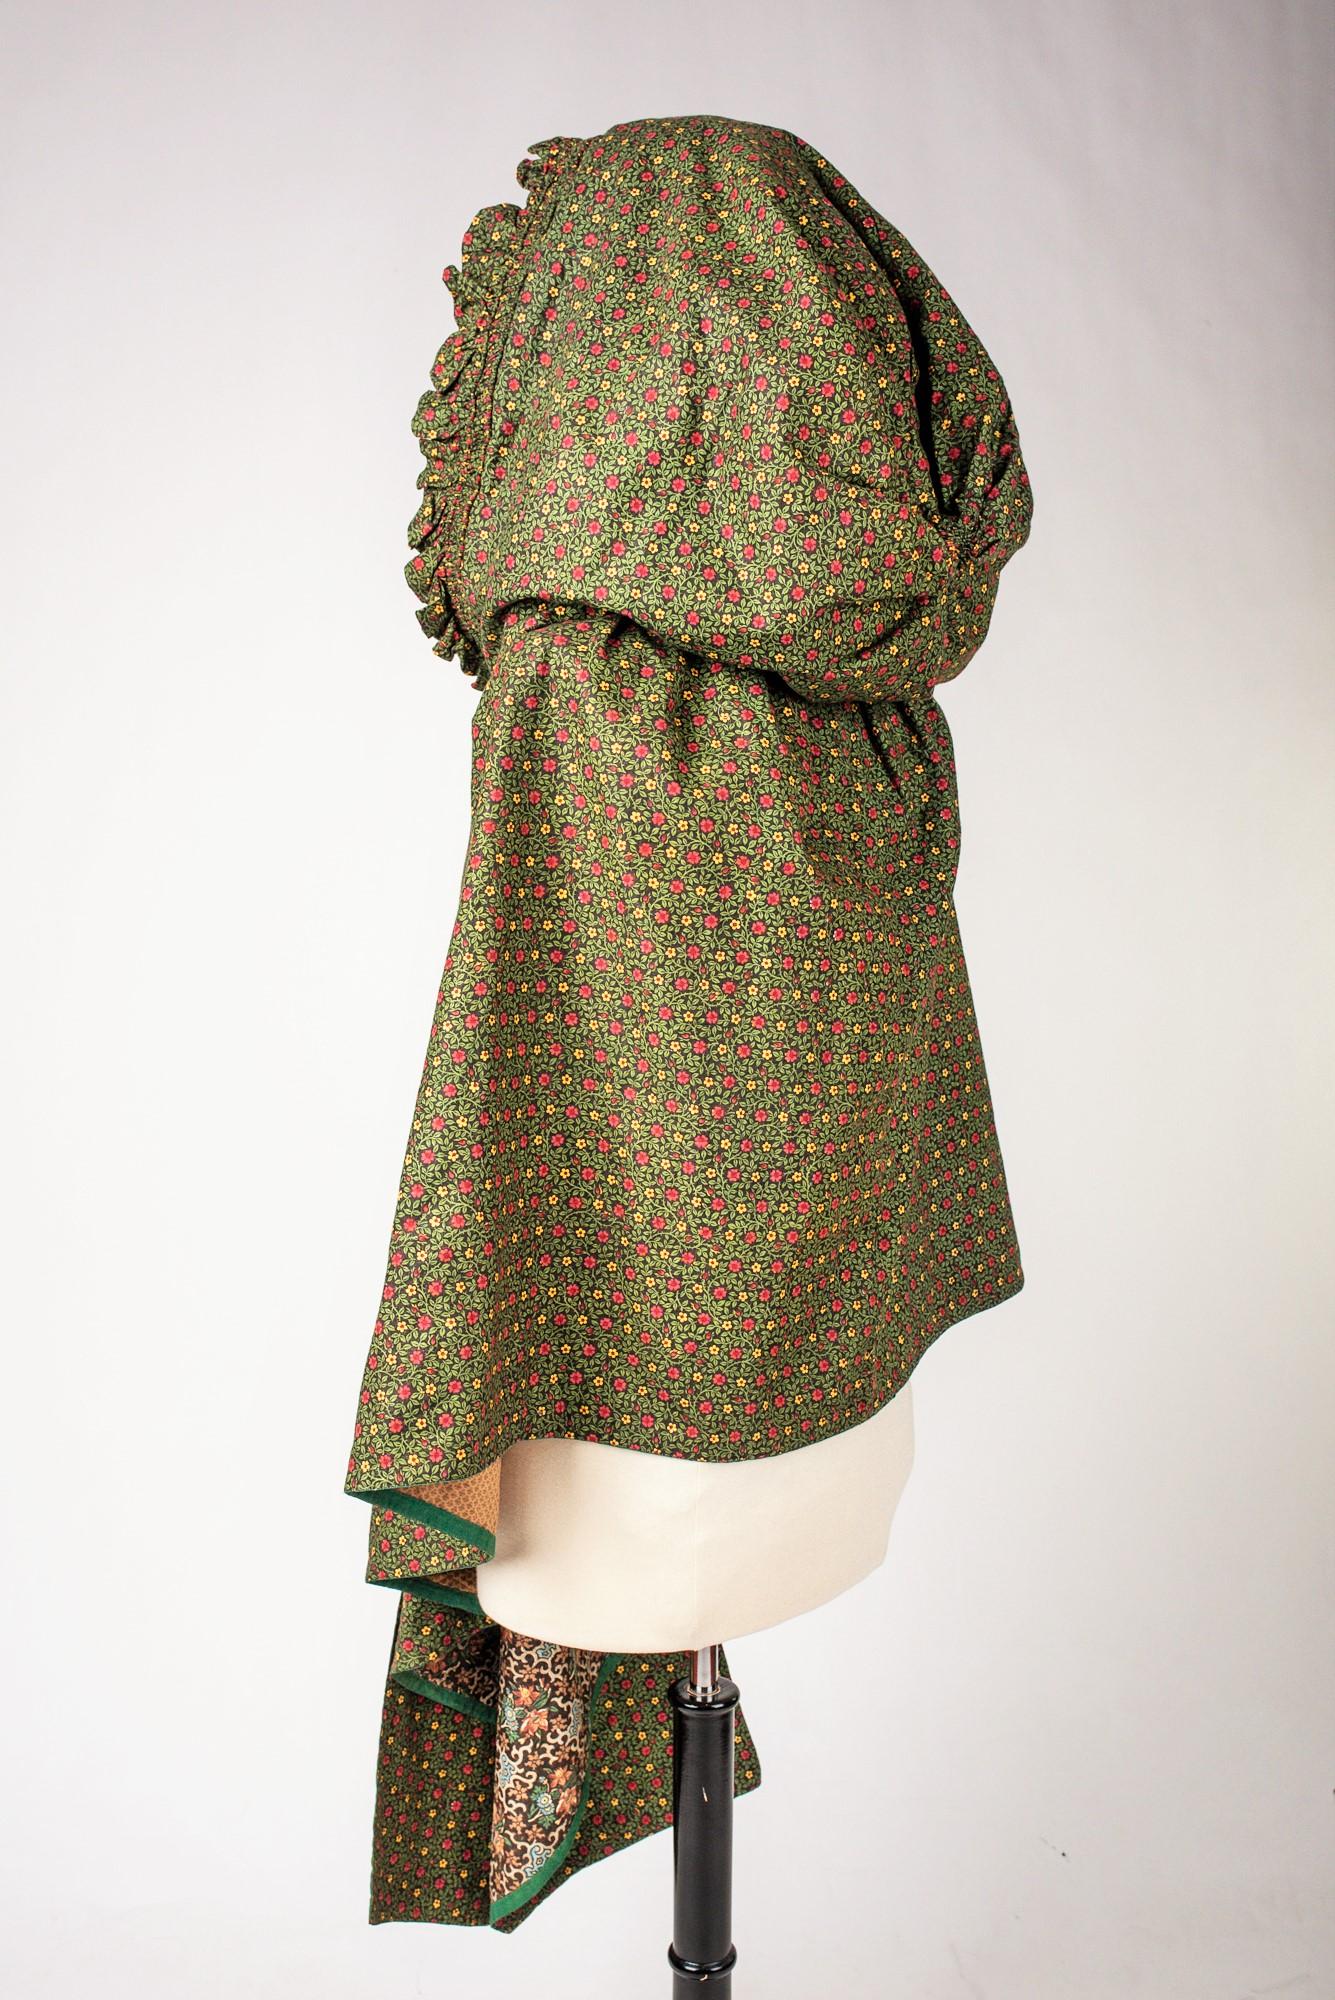 A Printed cotton Cloak- Provence Circa 1800 5